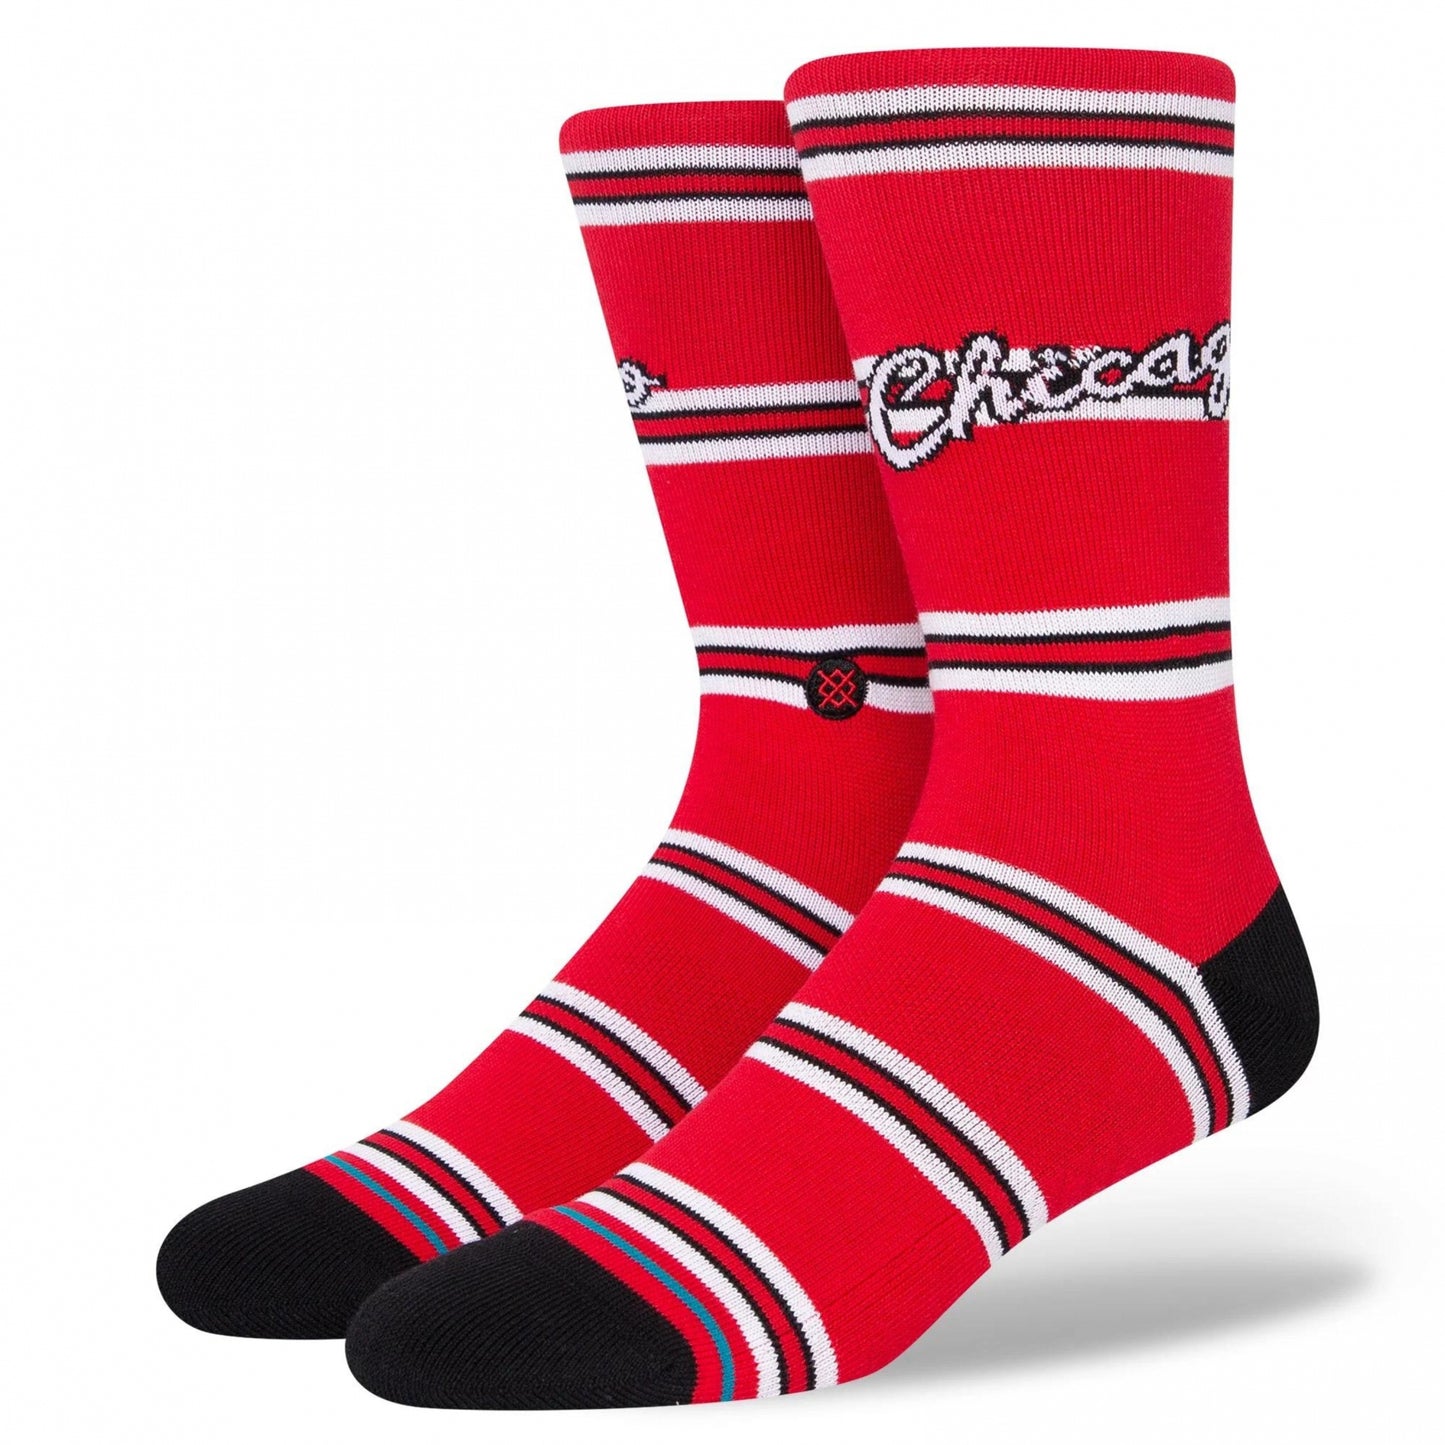 Stance Classics Bulls Socks RED